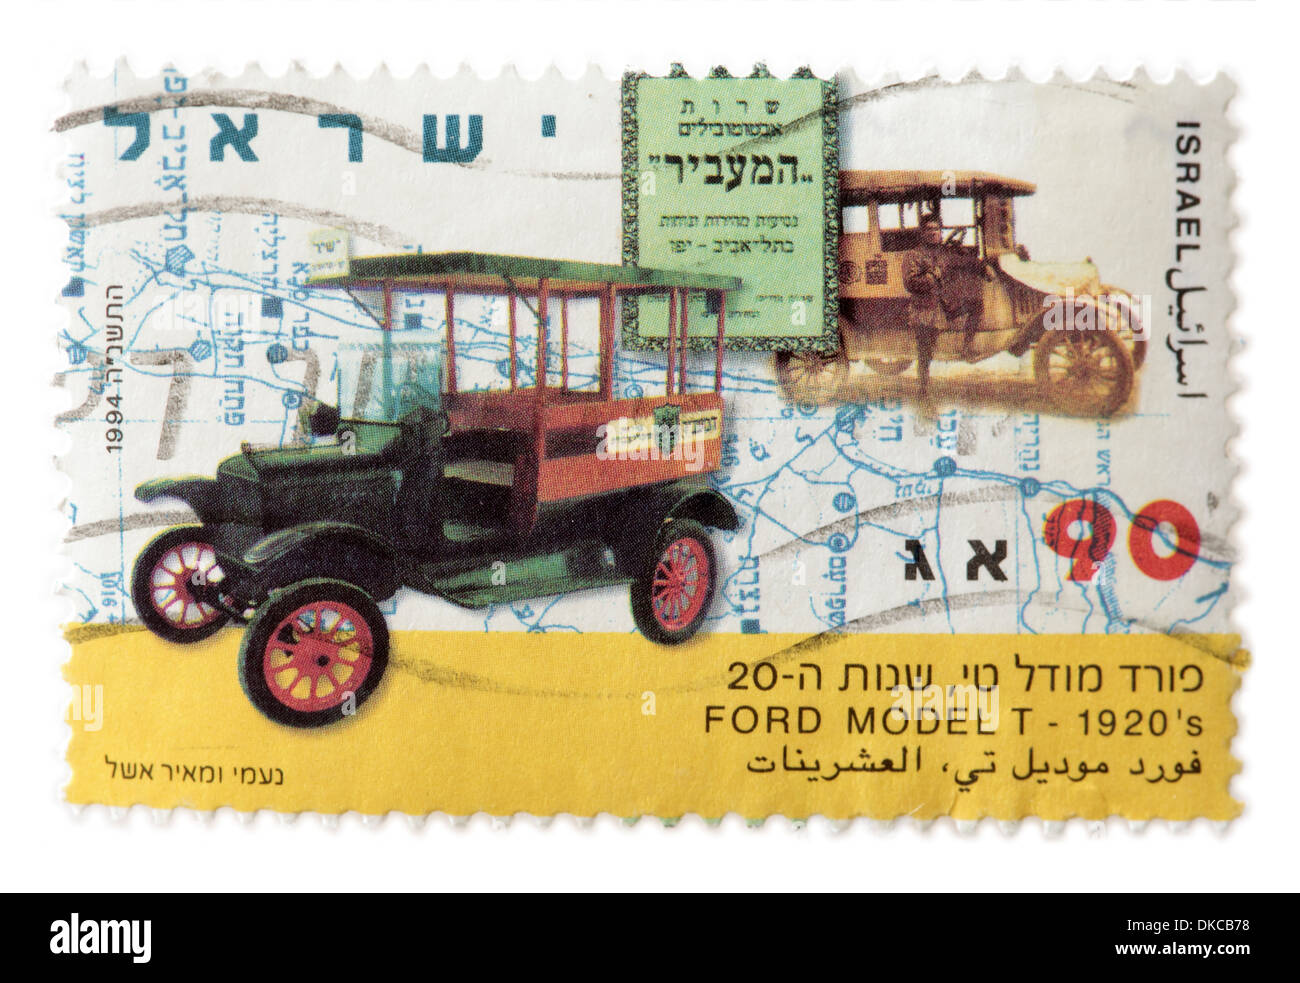 Ford Modell T-1920s - israelischen Poststempel Stockfoto